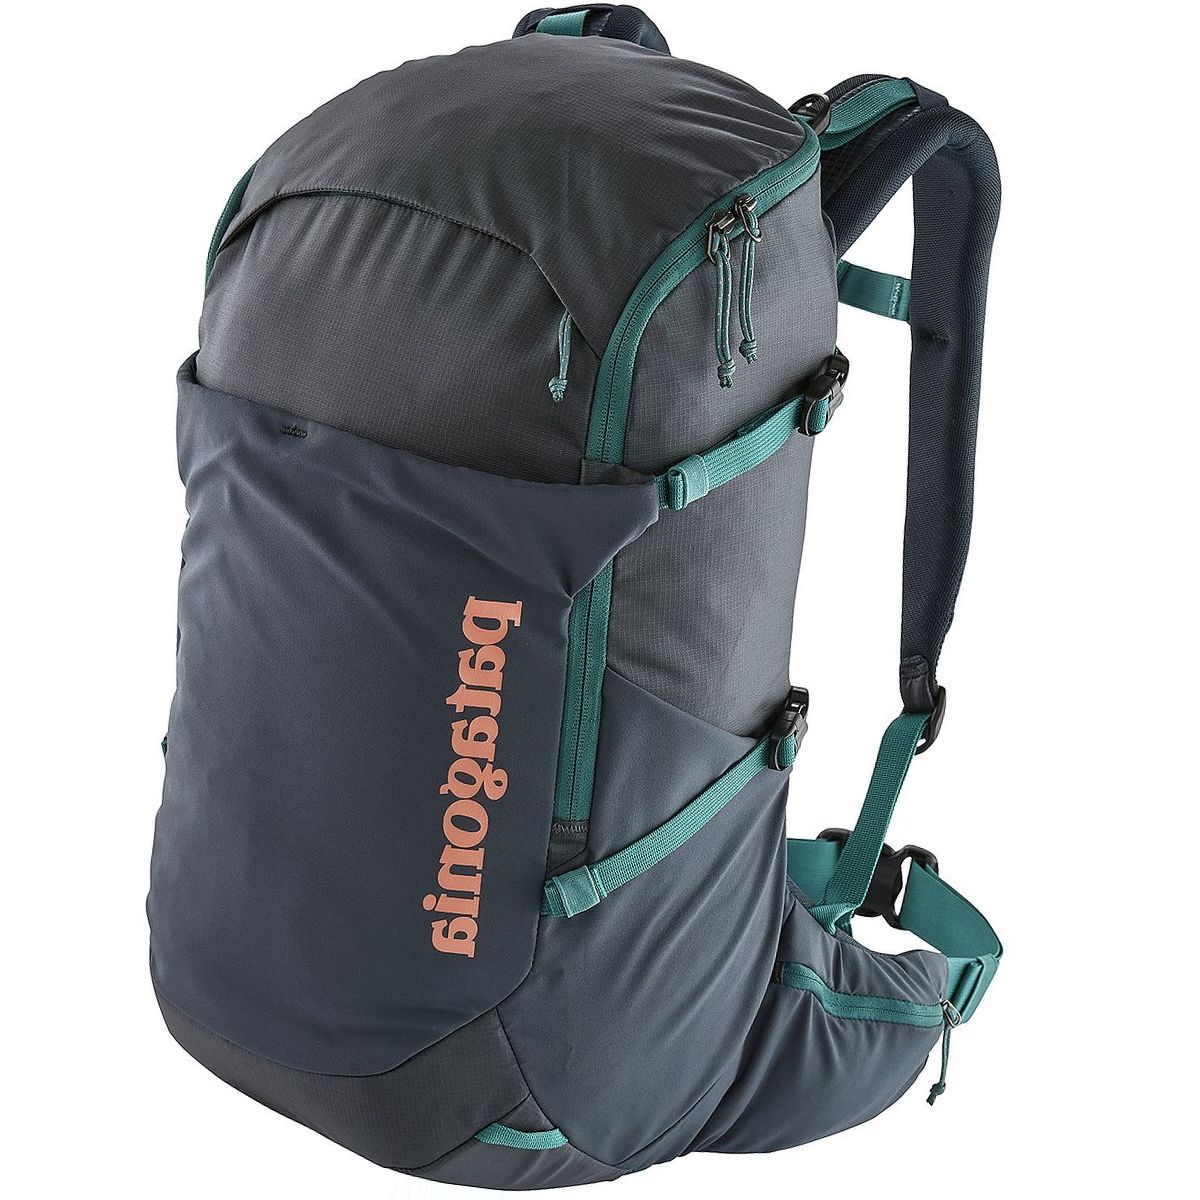 Patagonia Nine Trails 26L Backpack - Women's